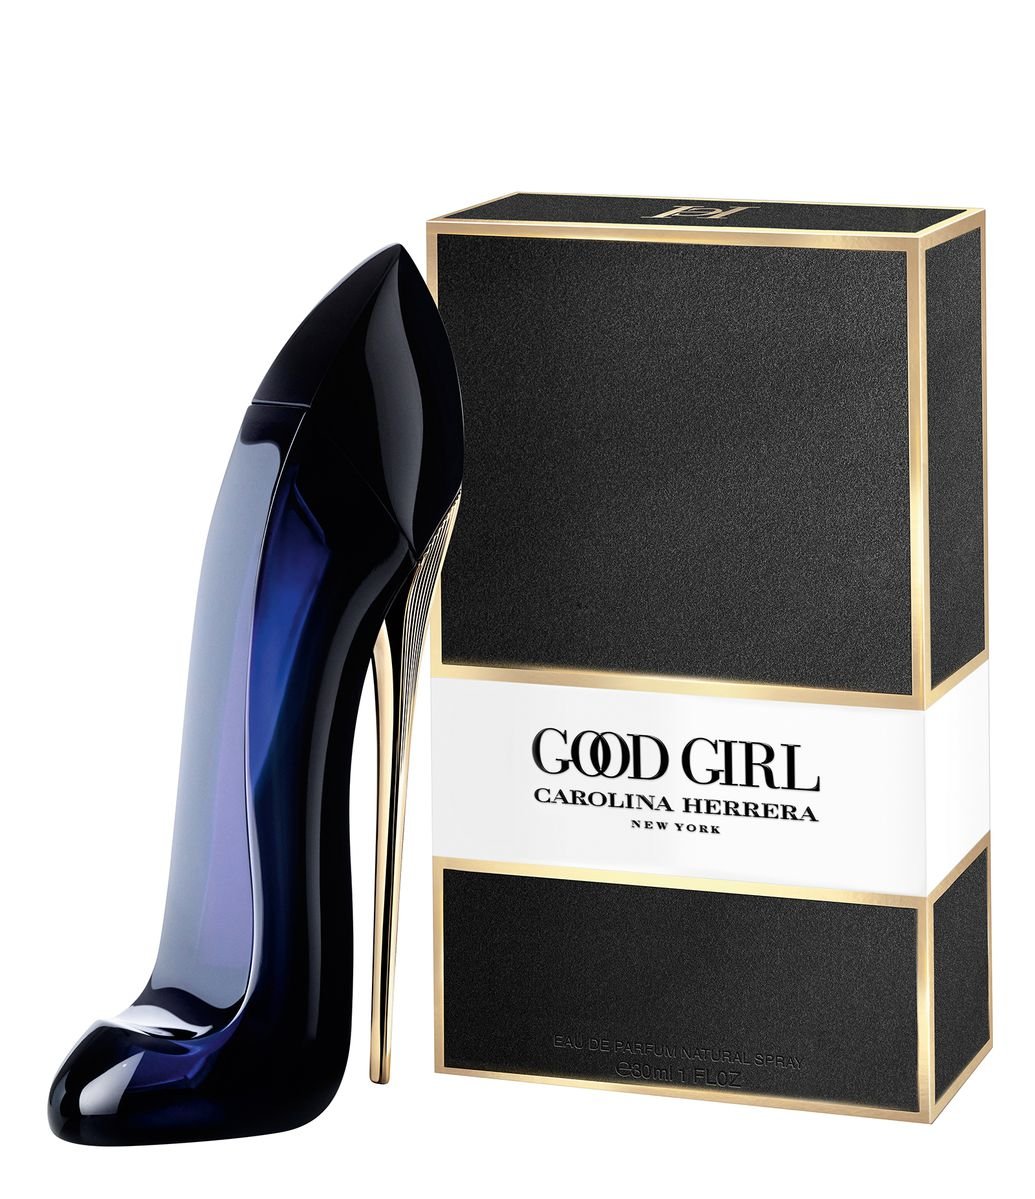 Good Girl - Perfume Feminino - Eau de Parfum, Carolina Herrera